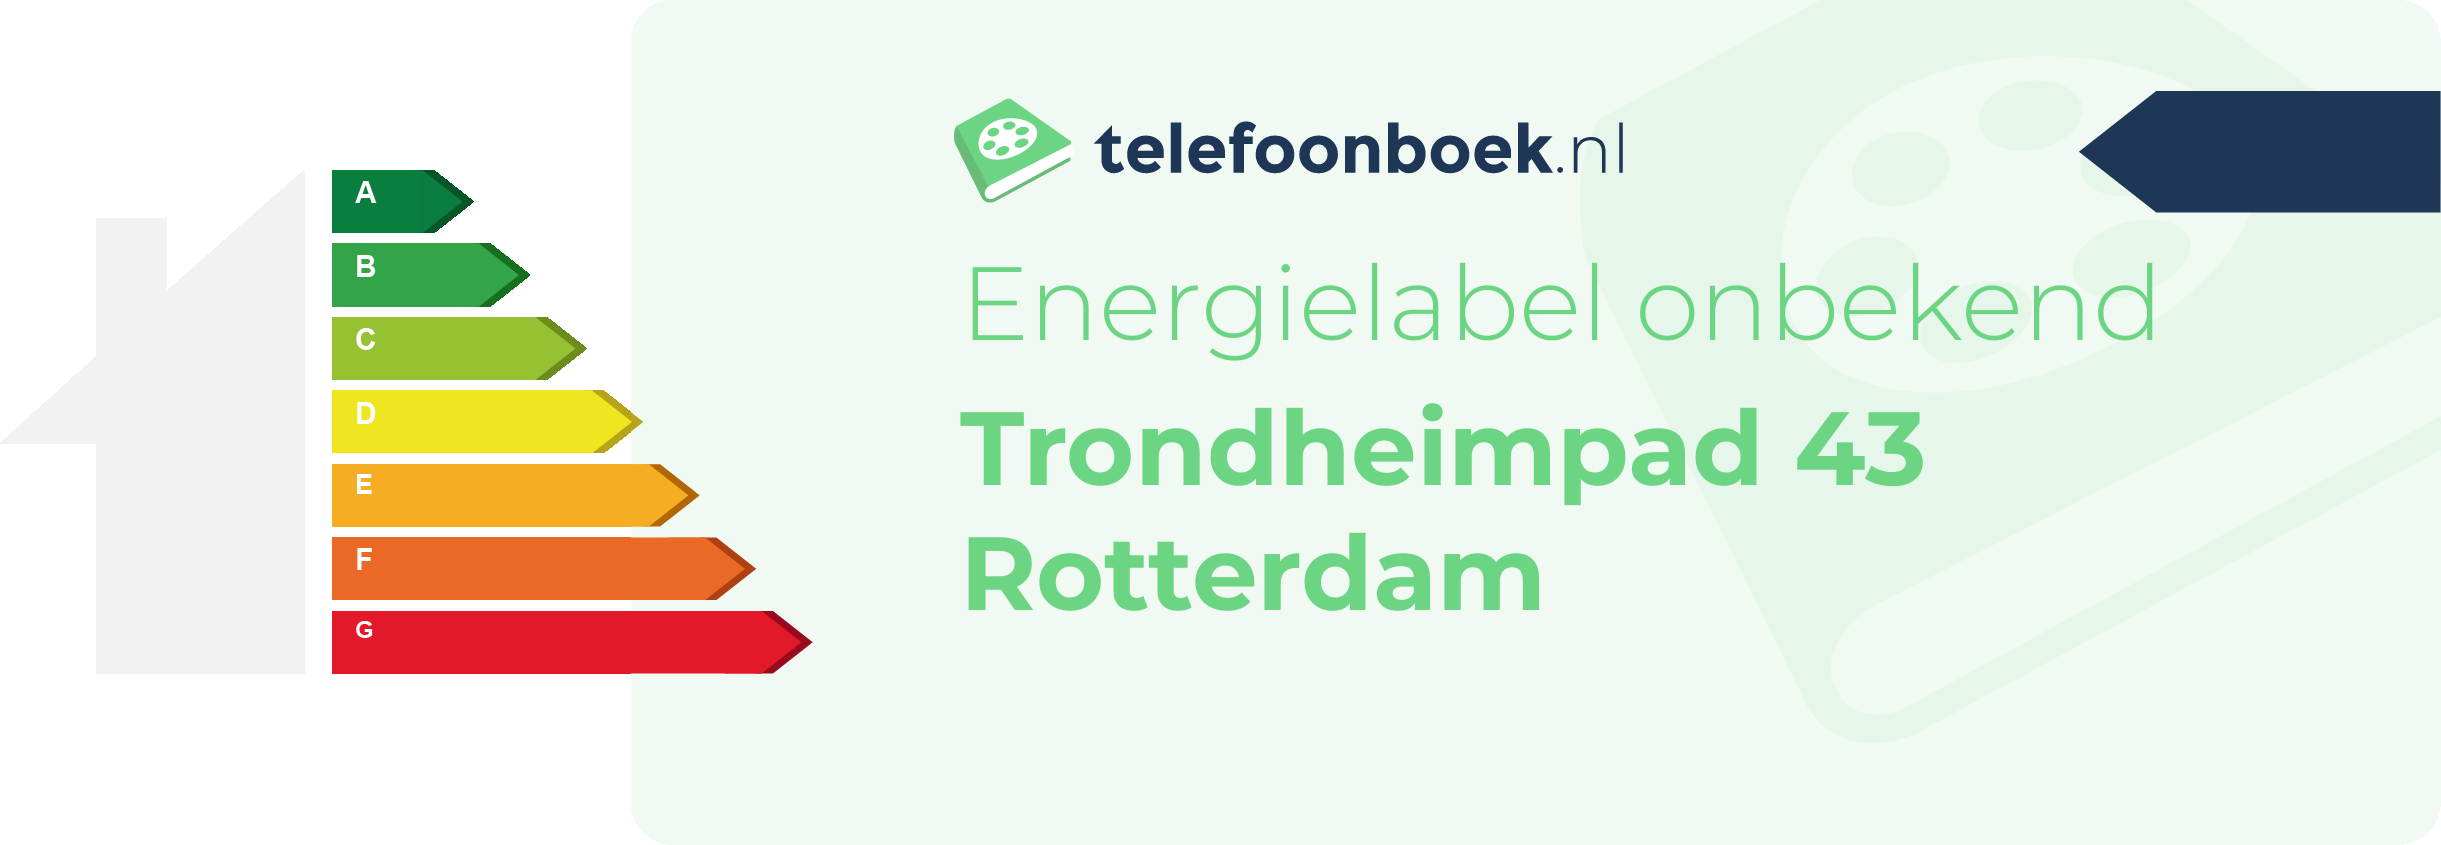 Energielabel Trondheimpad 43 Rotterdam